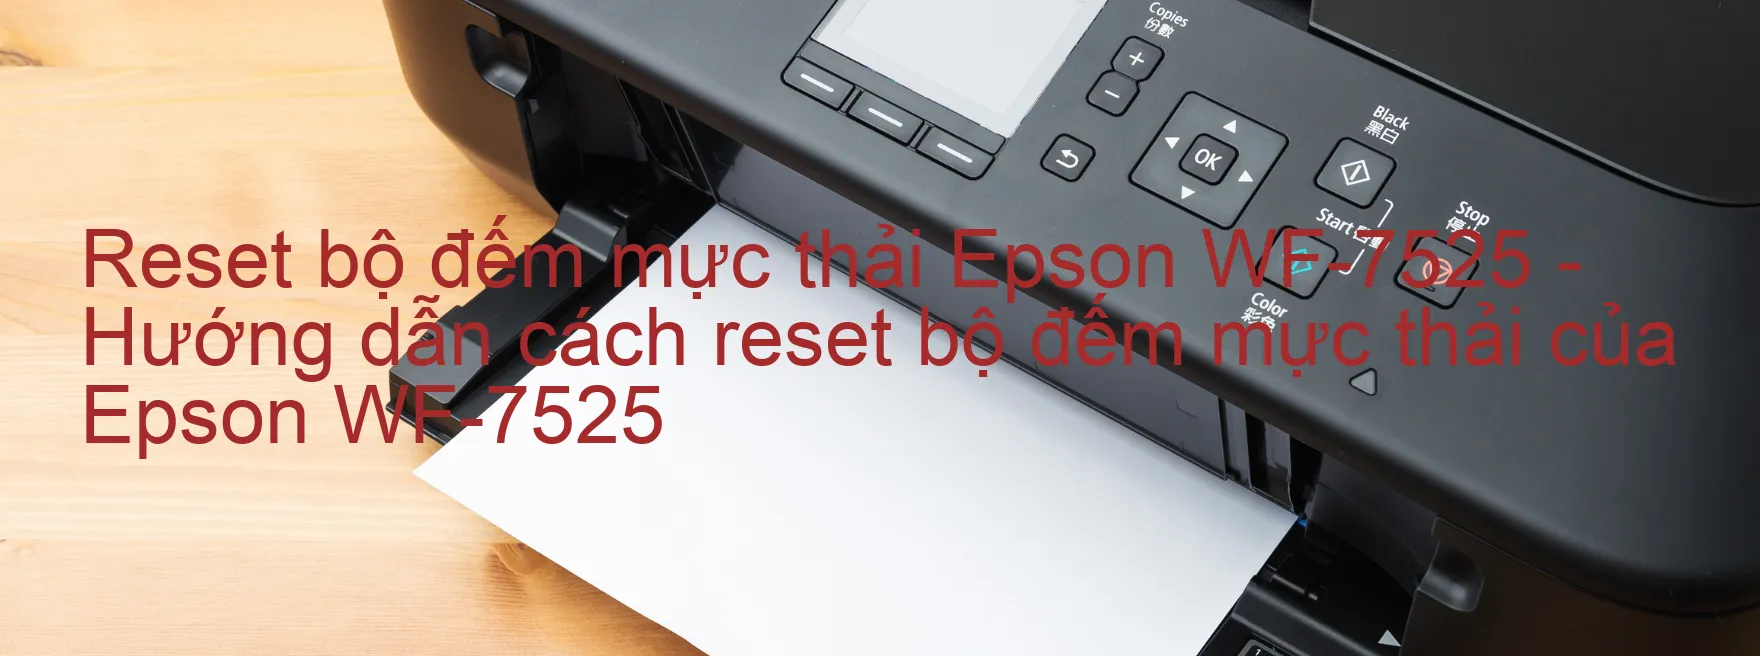 Reset bộ đếm mực thải Epson WF-7525 - Hướng dẫn cách reset bộ đếm mực thải của Epson WF-7525